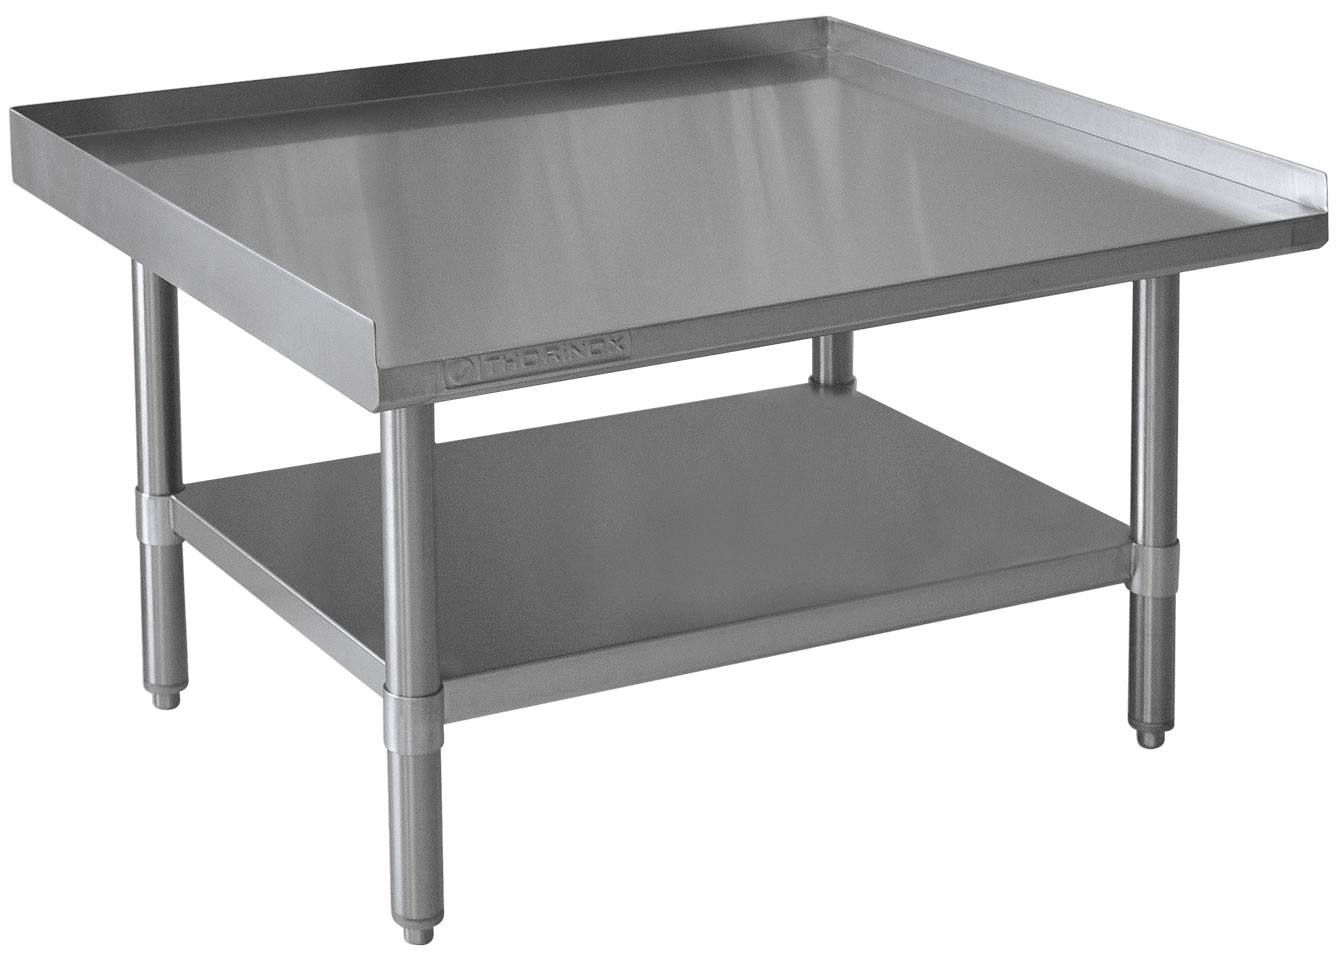 Thorinox DSTAND-3024-SS 30x24 不锈钢桌子 - 不锈钢底架